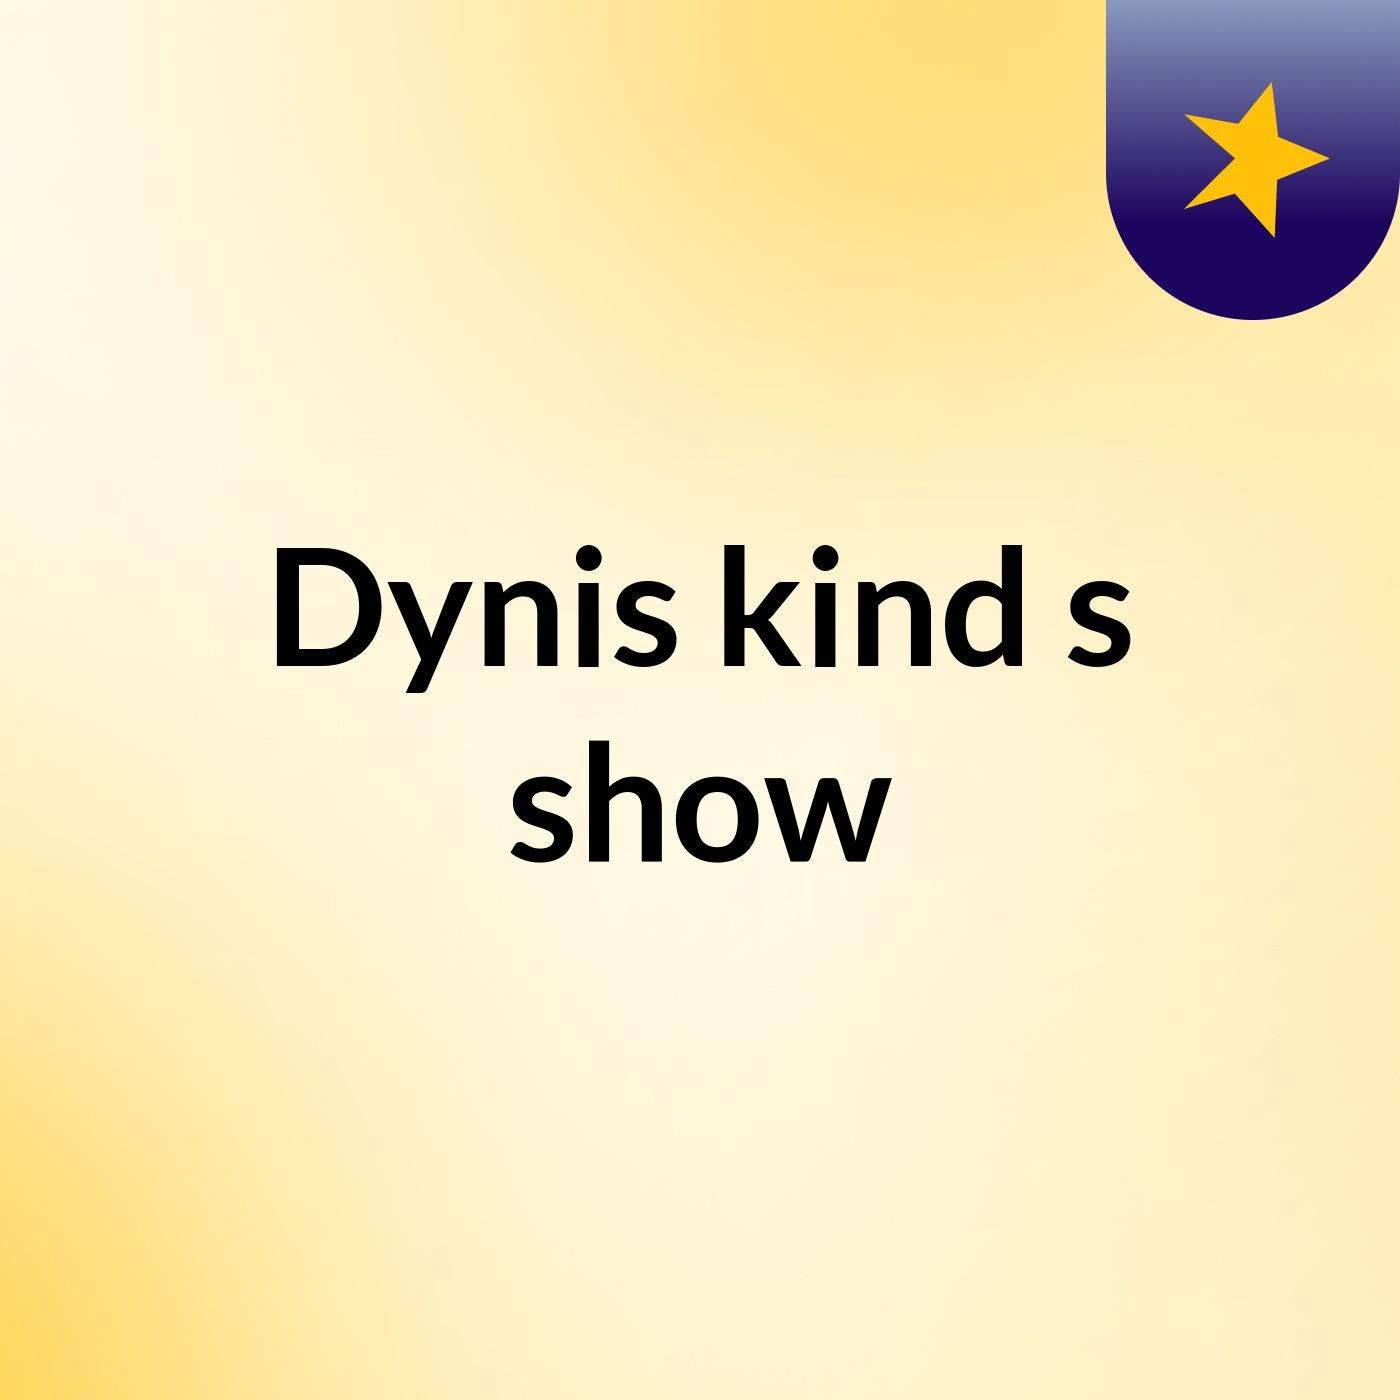 Dynis kind's show